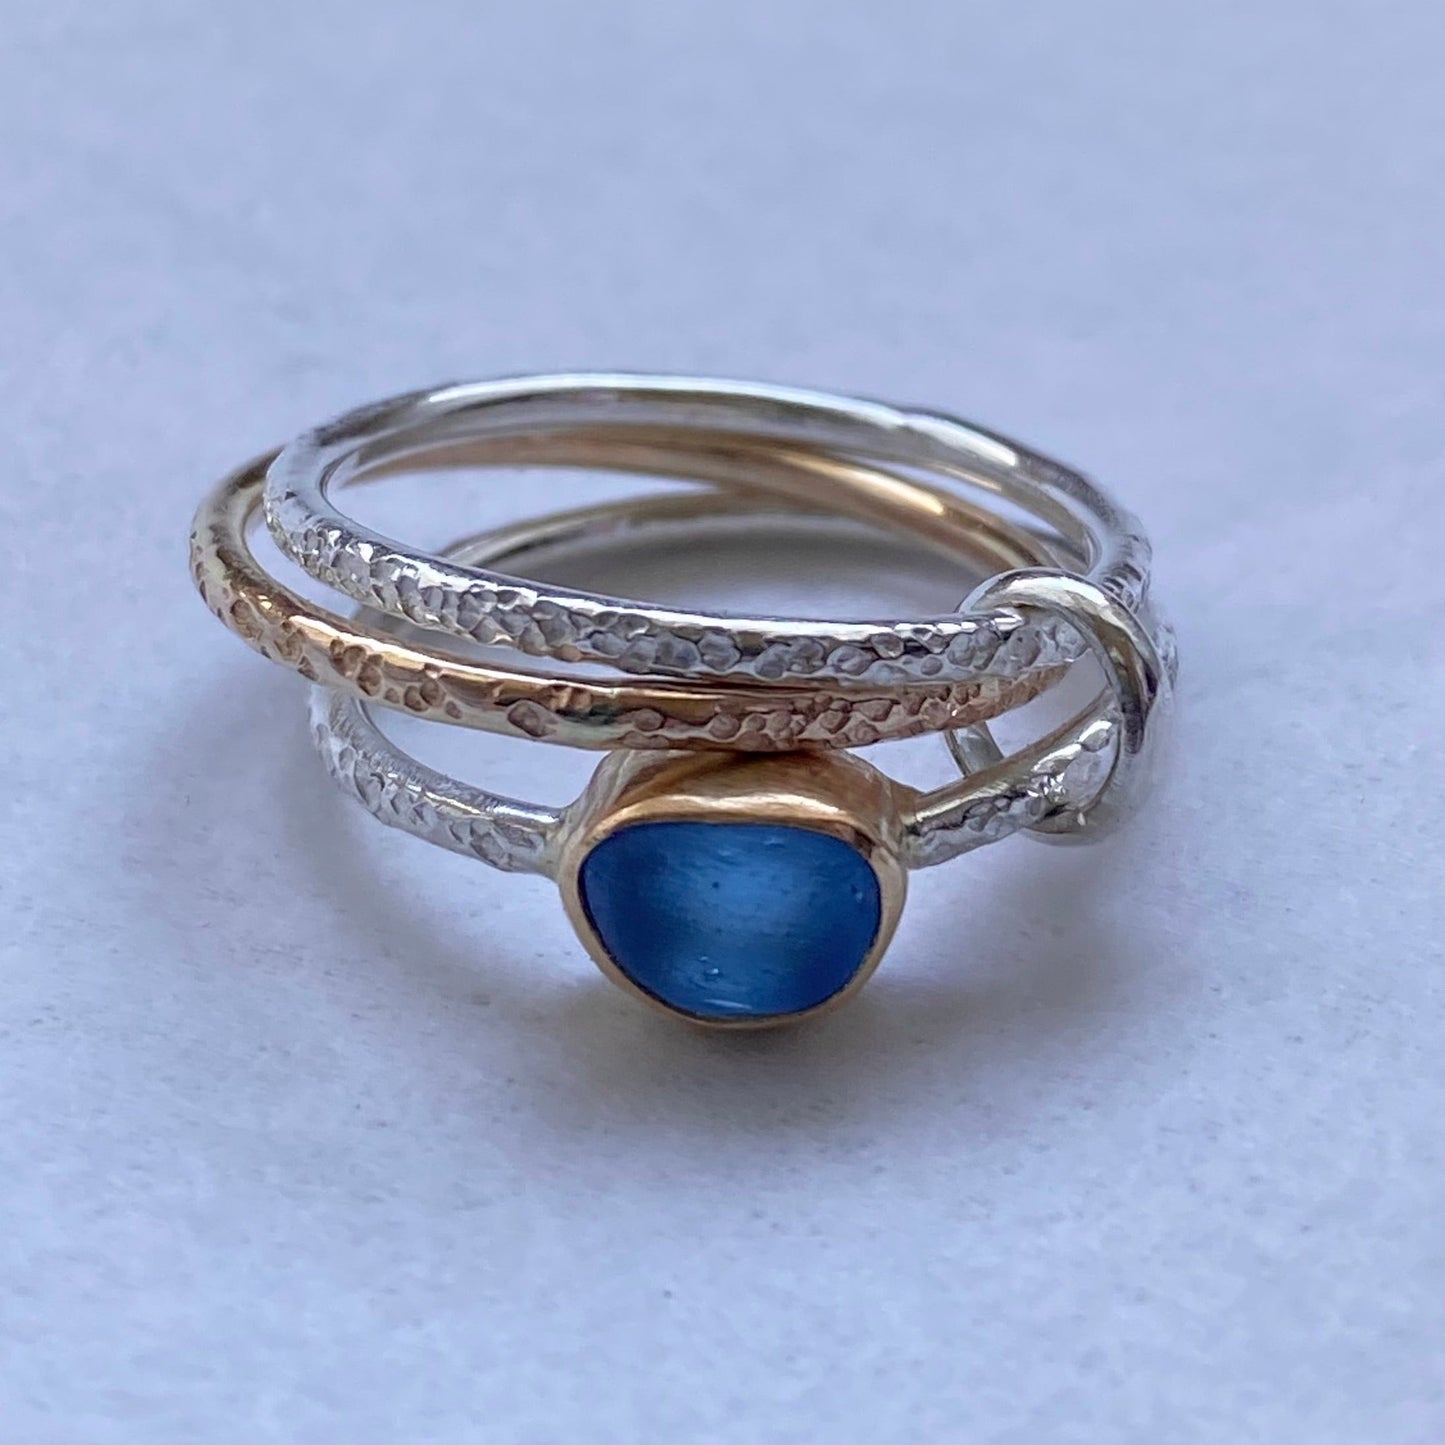 Ternion Tides Sea Glass Ring